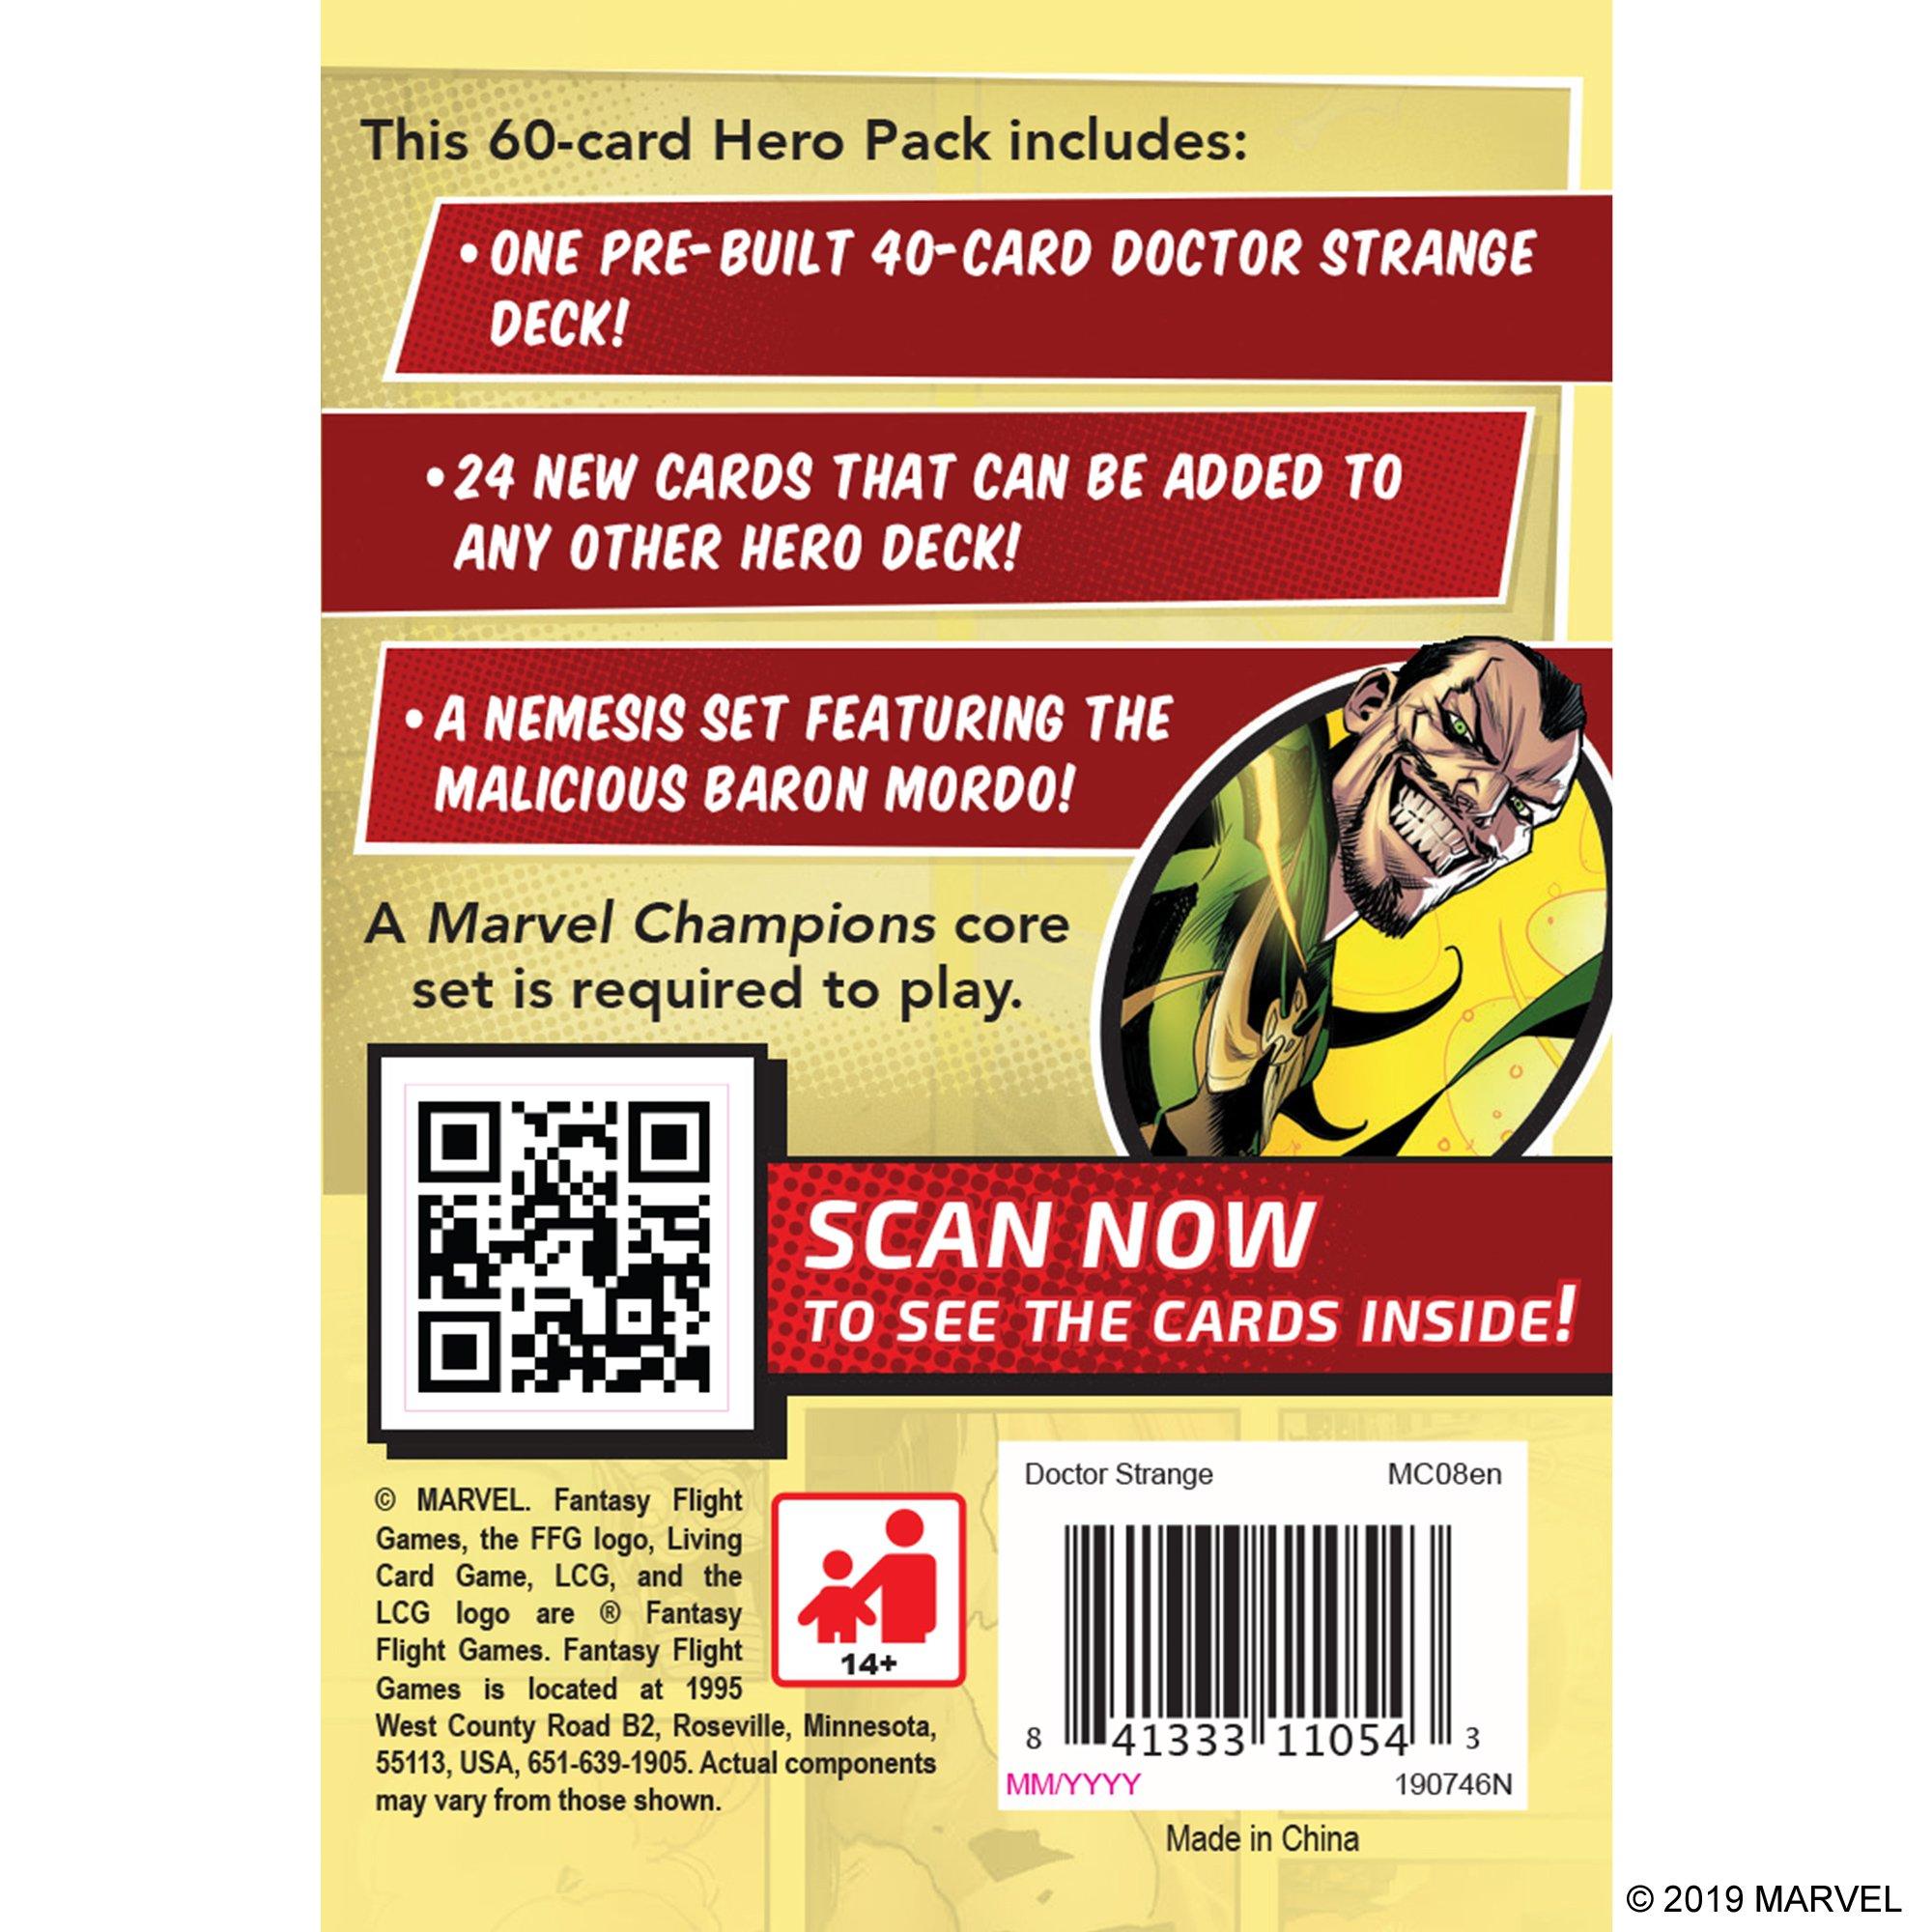 Marvel Champions: The Card Game Doctor Strange Hero Pack